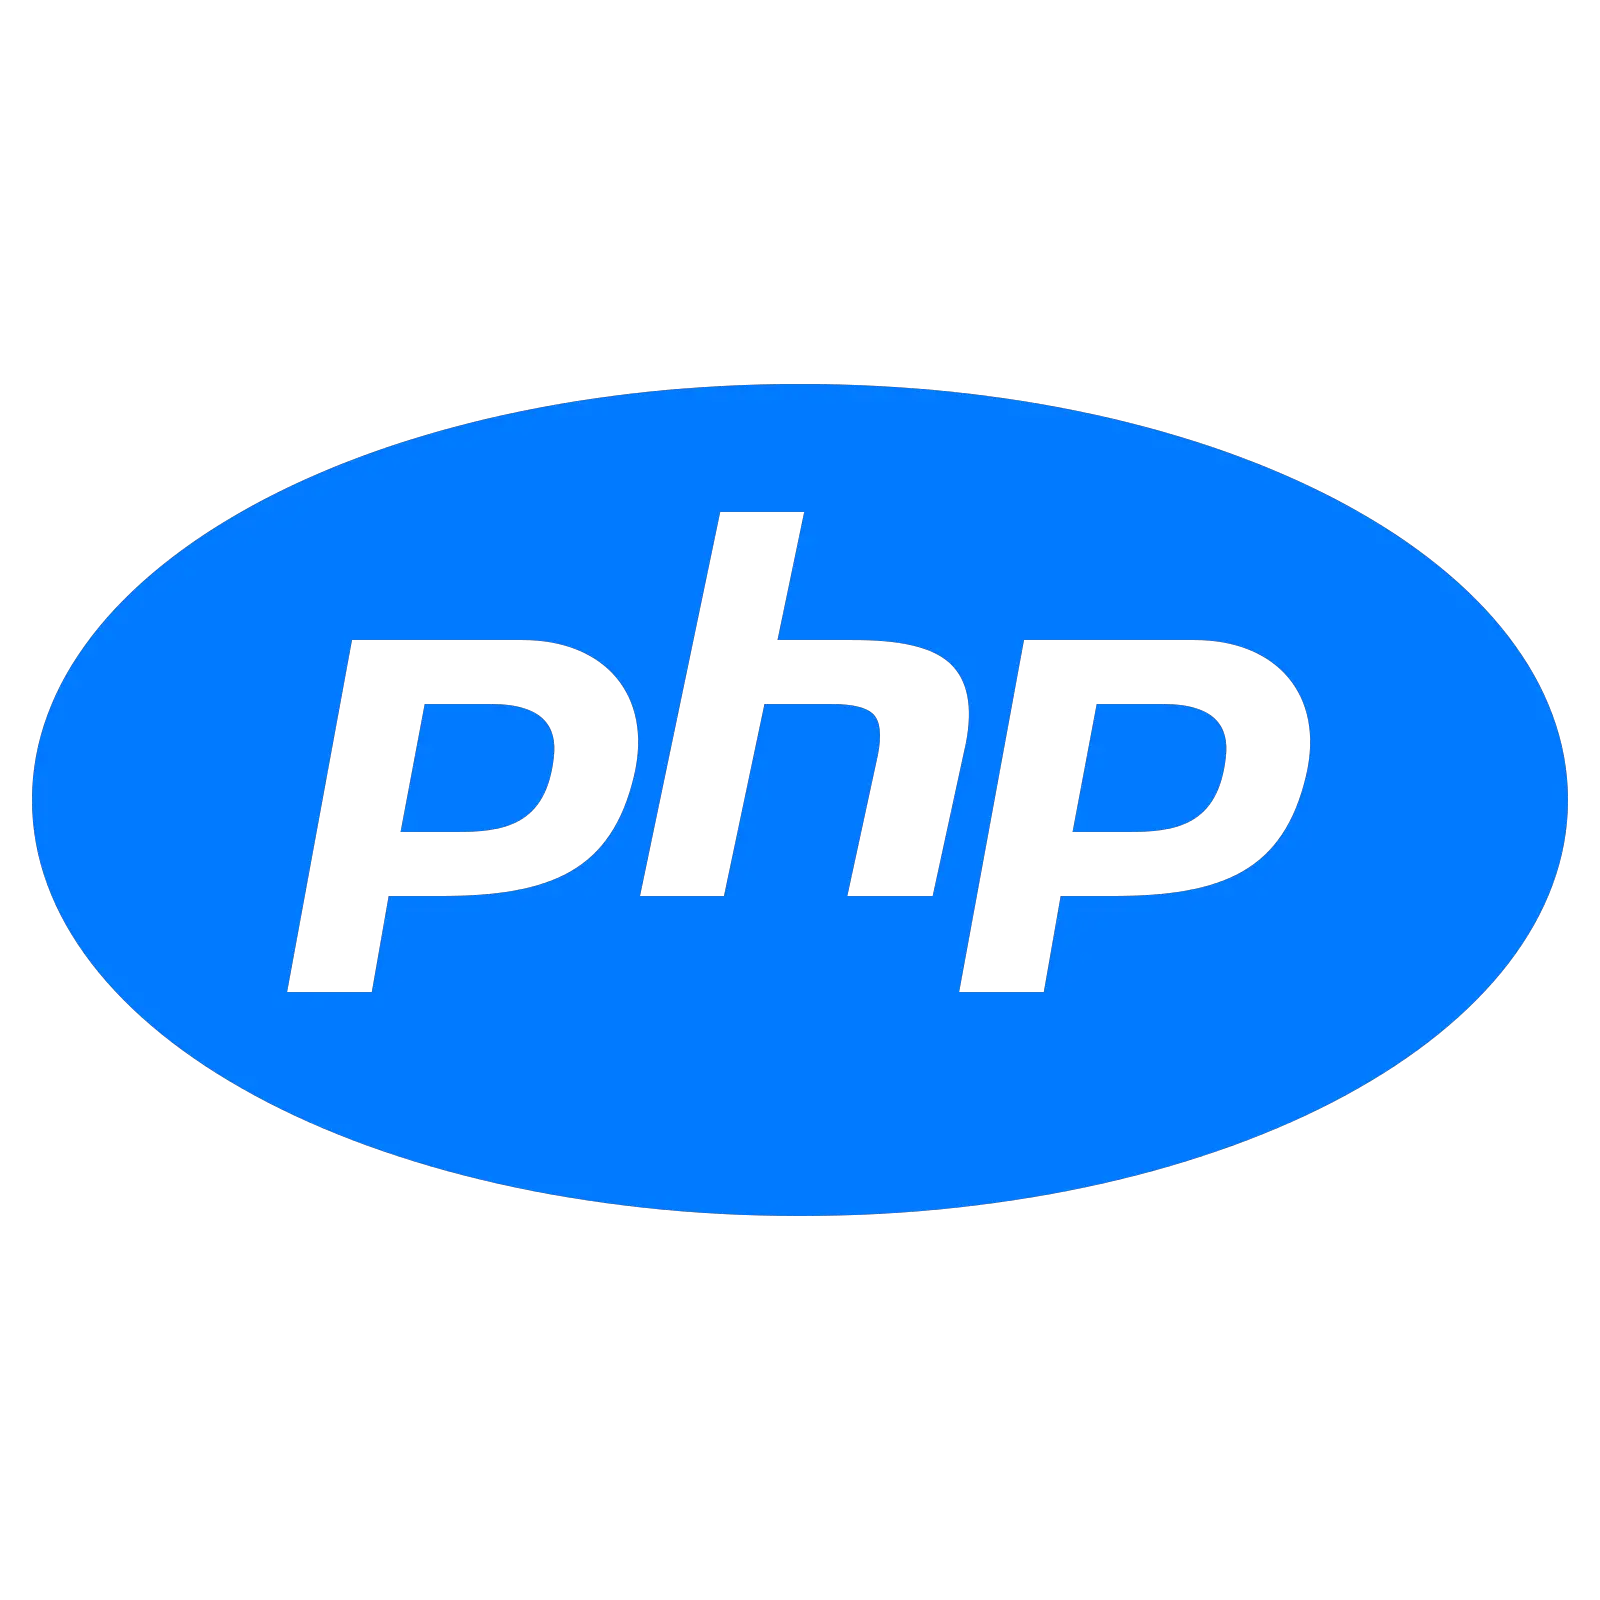 php-logo-transparent